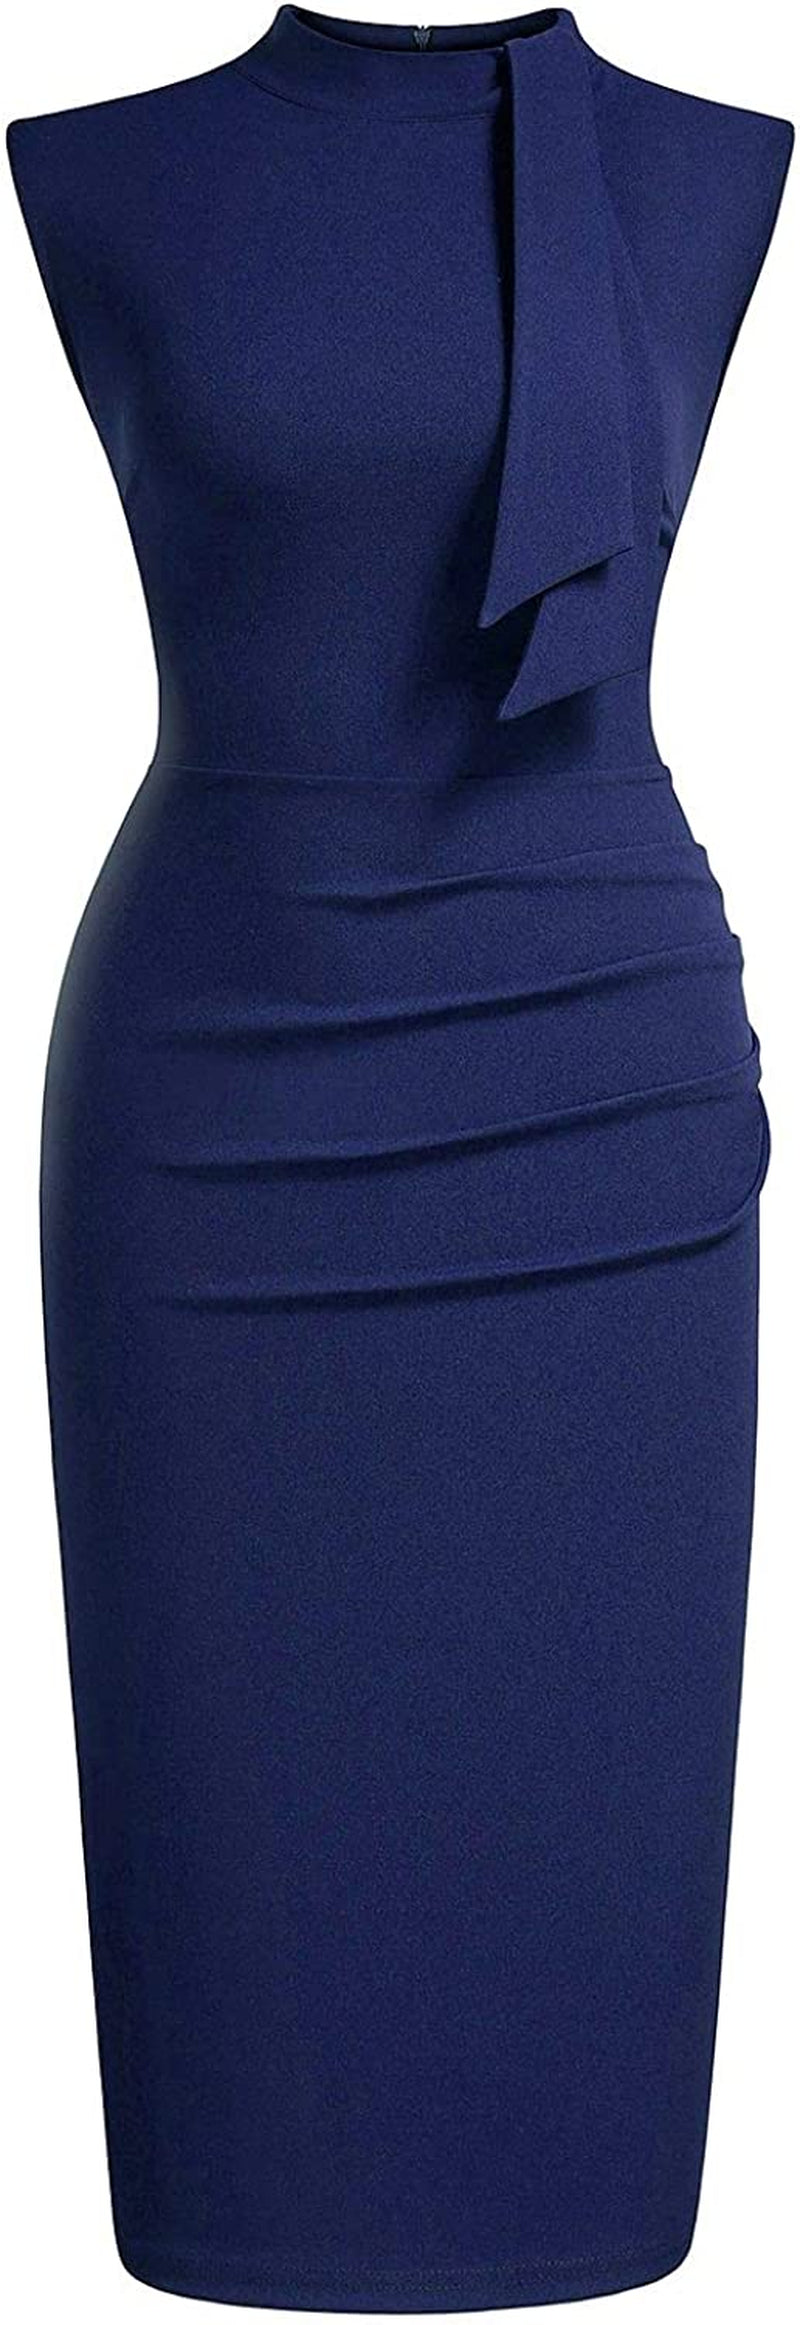 Women'S Retro 1950S Style Half Collar Ruffle Cocktail Pencil Dress –  Whispers